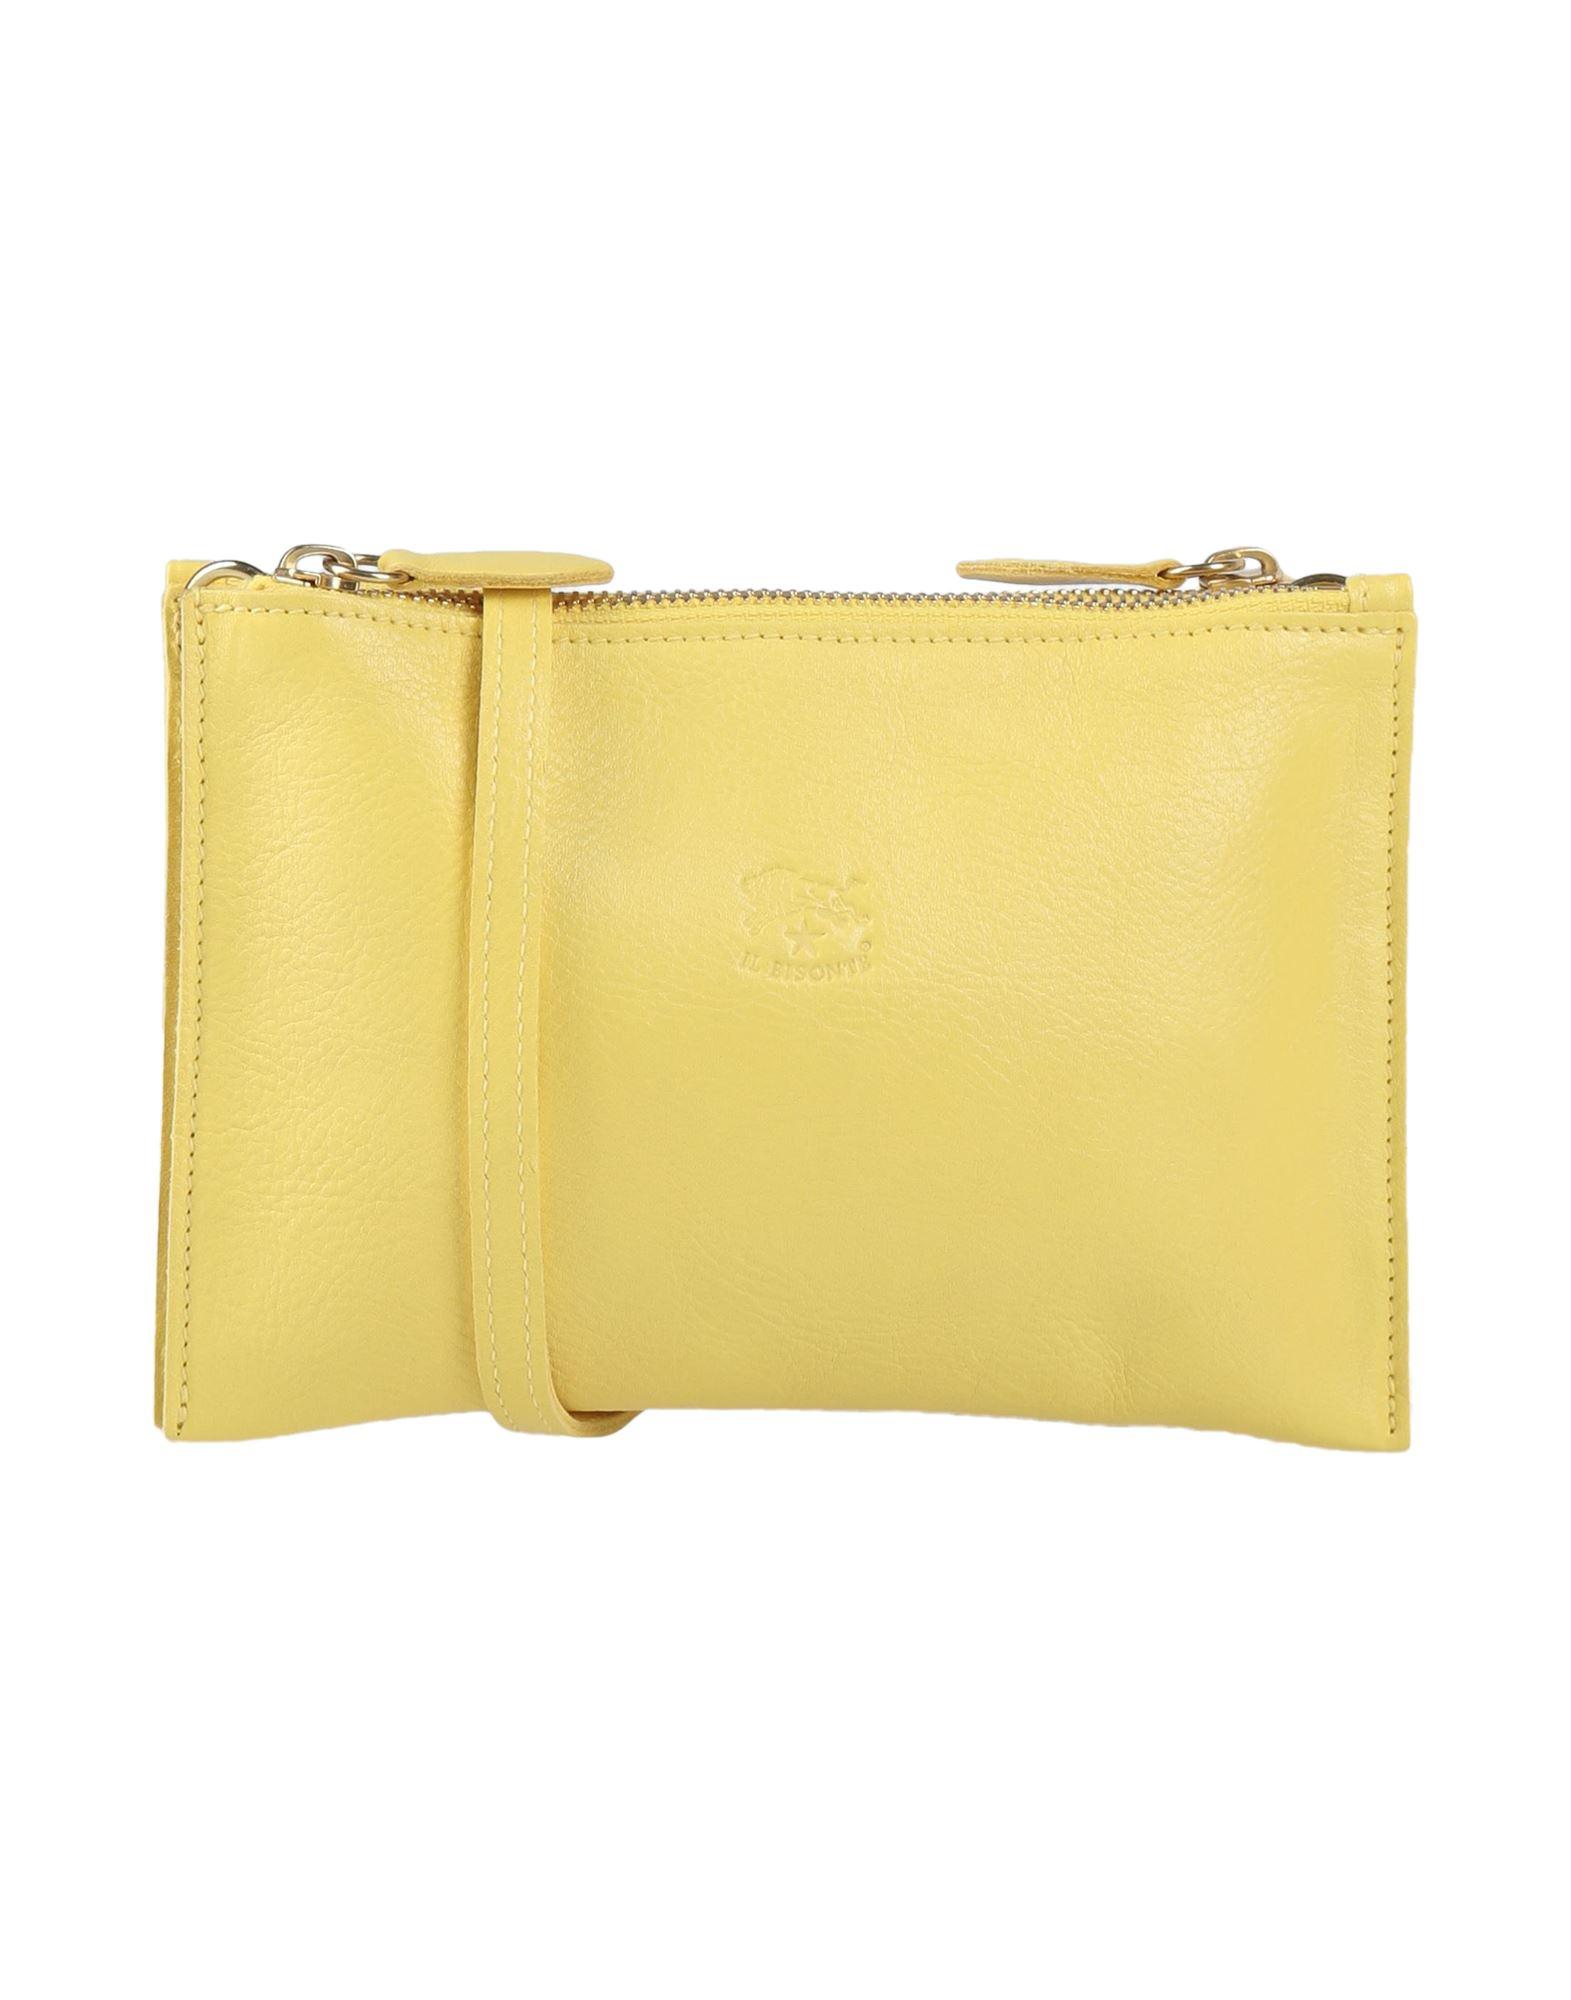 Liars & Lovers Exclusive cross body mini bag in pastel yellow croc | ASOS